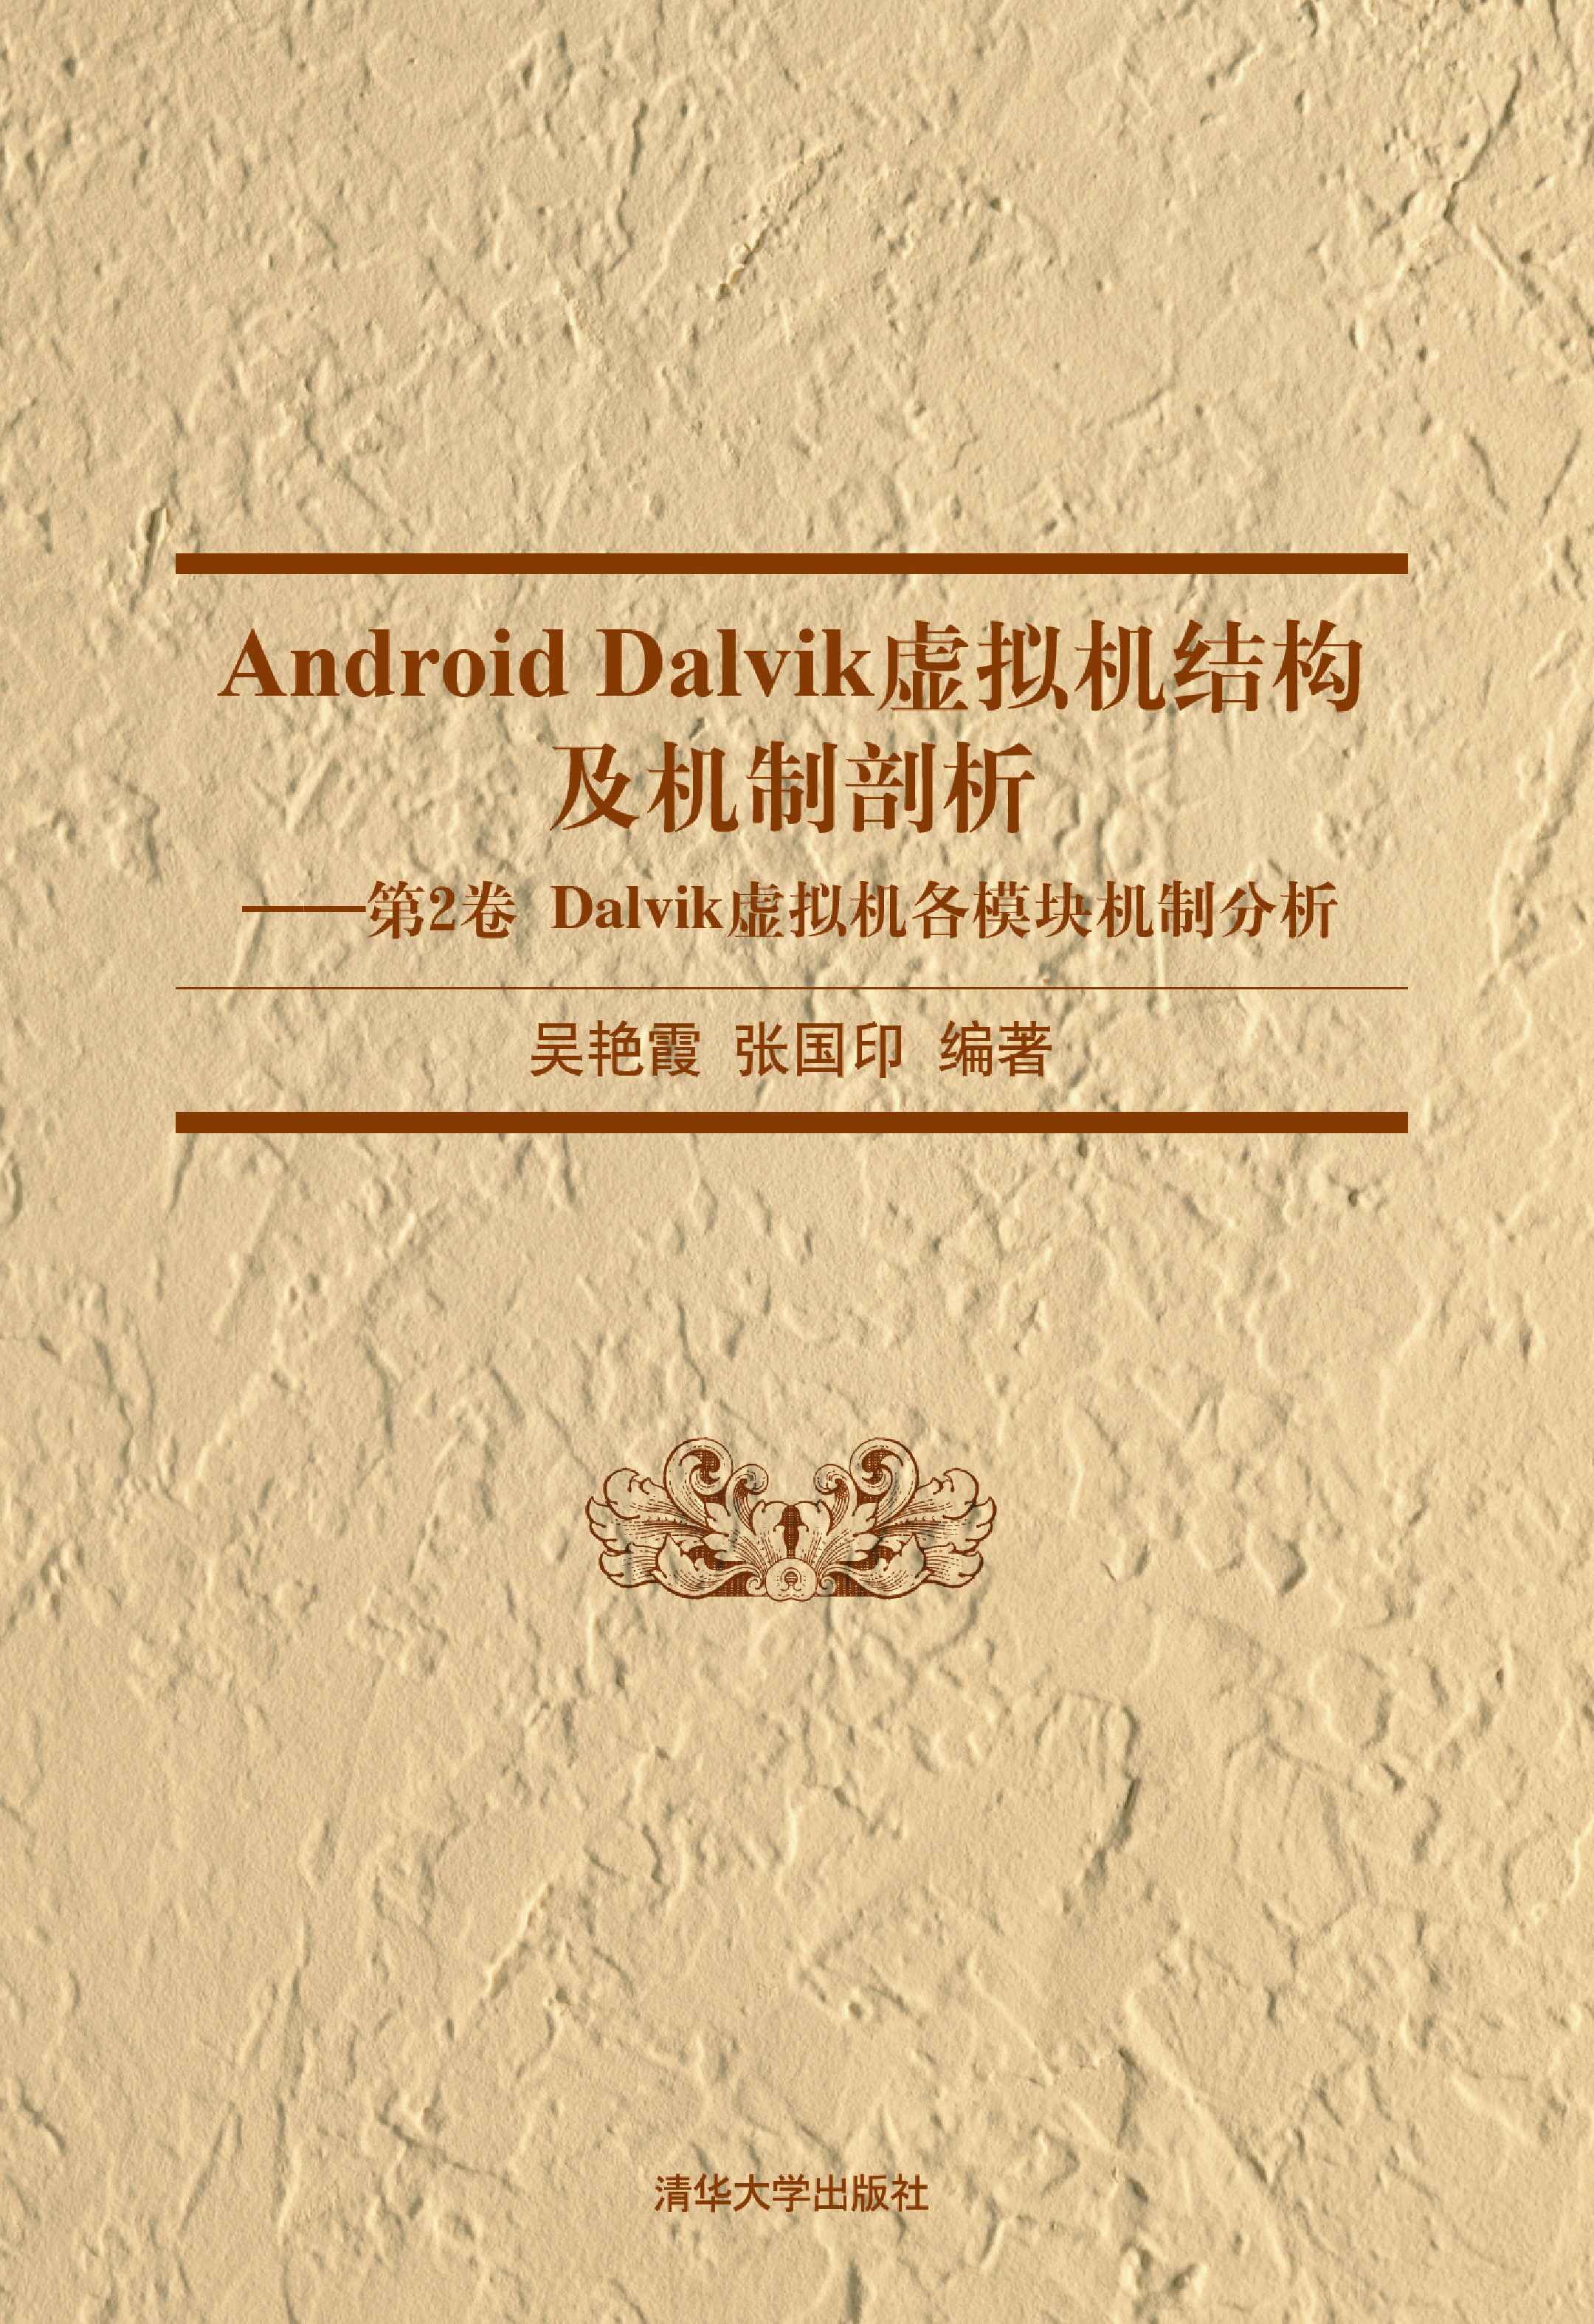 Android Dalvik虚拟机结构及机制剖析——第2卷 Dalvik虚拟机各模块机制分析